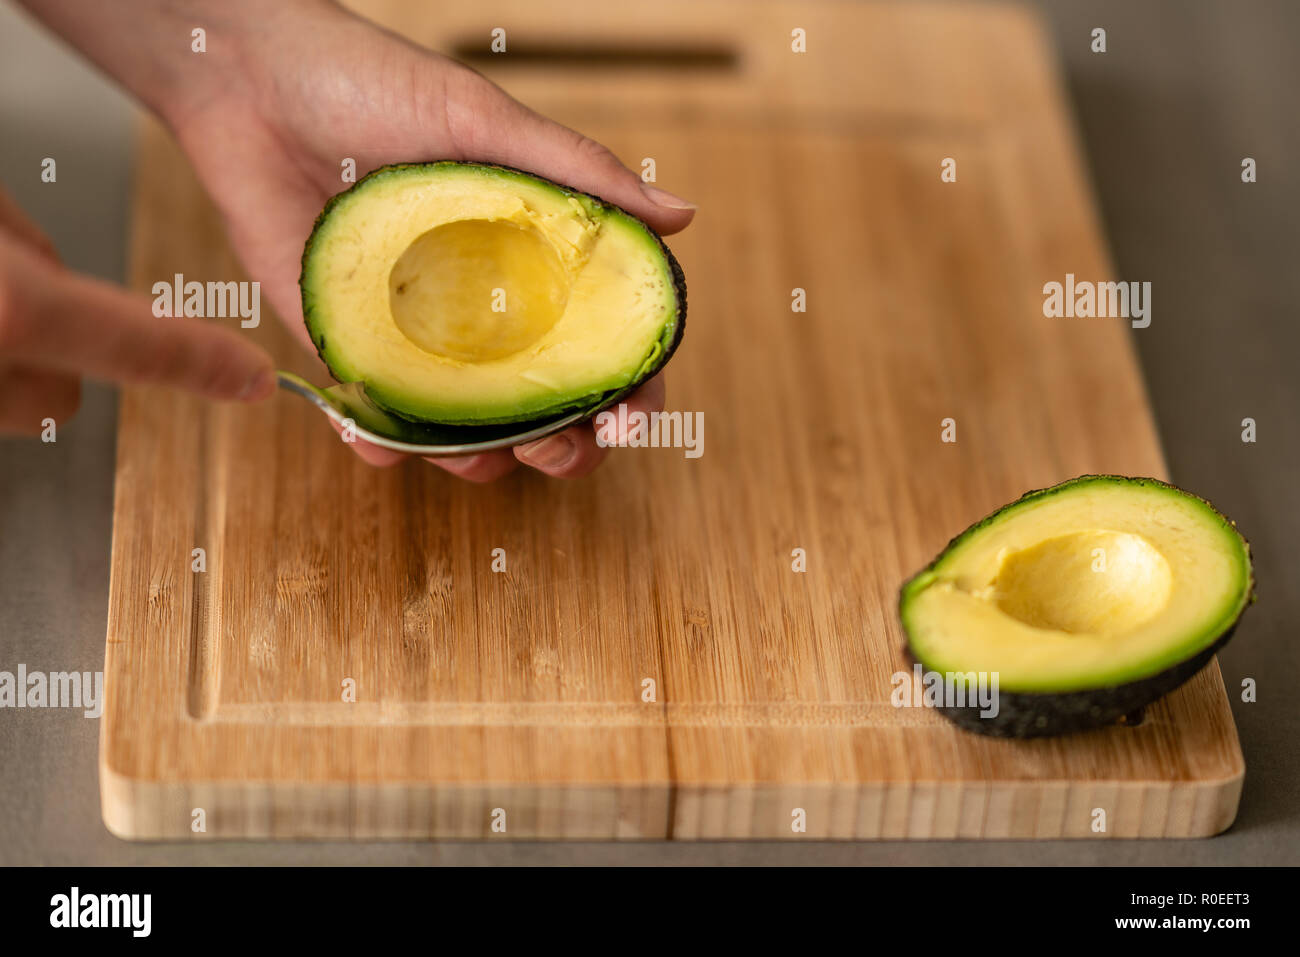 A woman hollowing out a avocado to make guacamole. Stock Photo